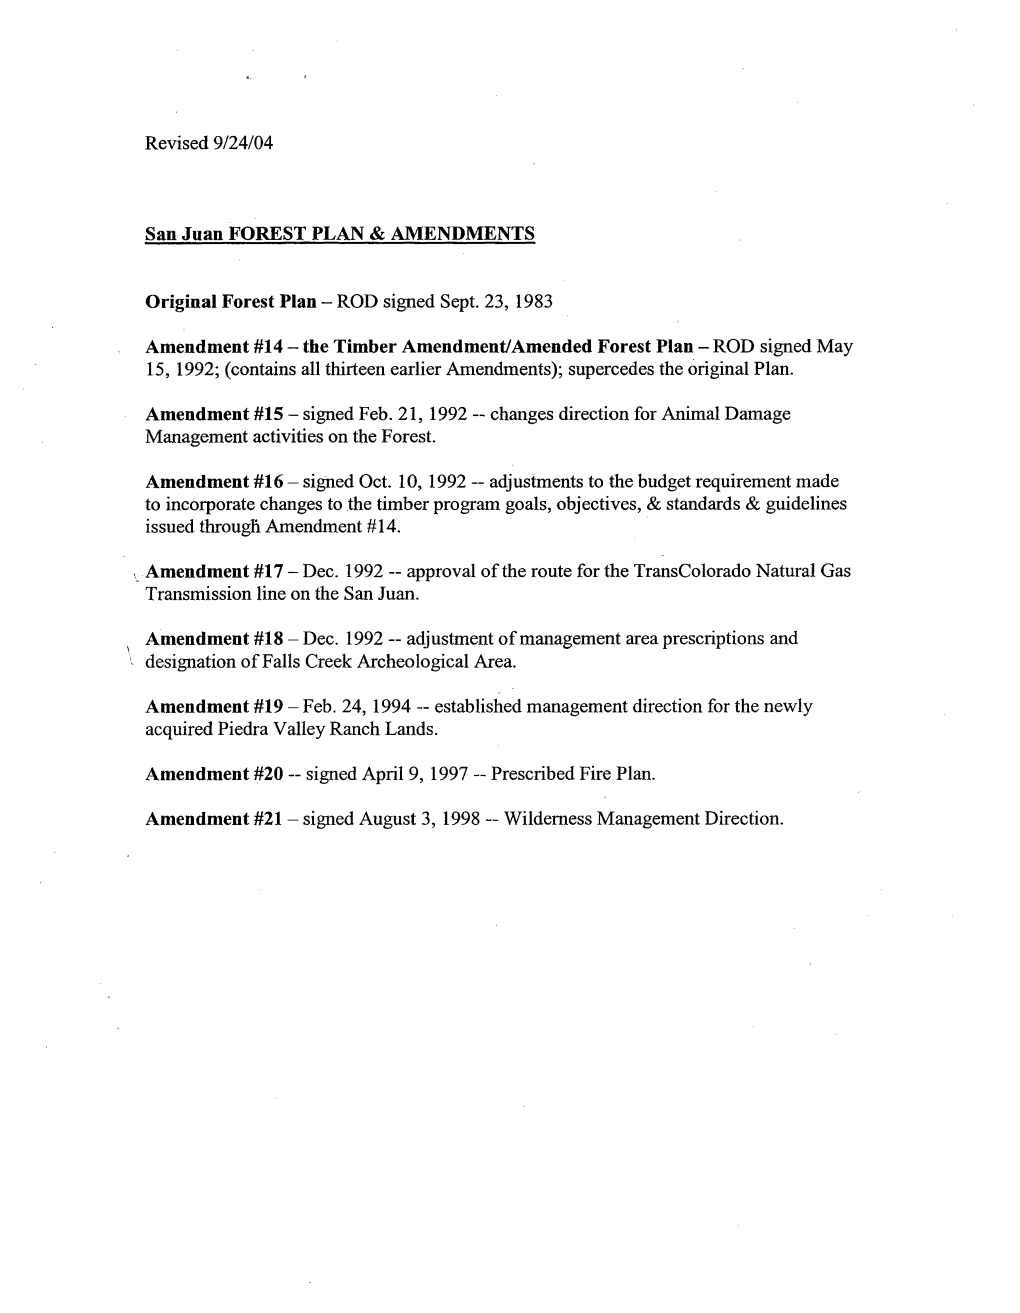 San Juan Forest Plan and Amendments